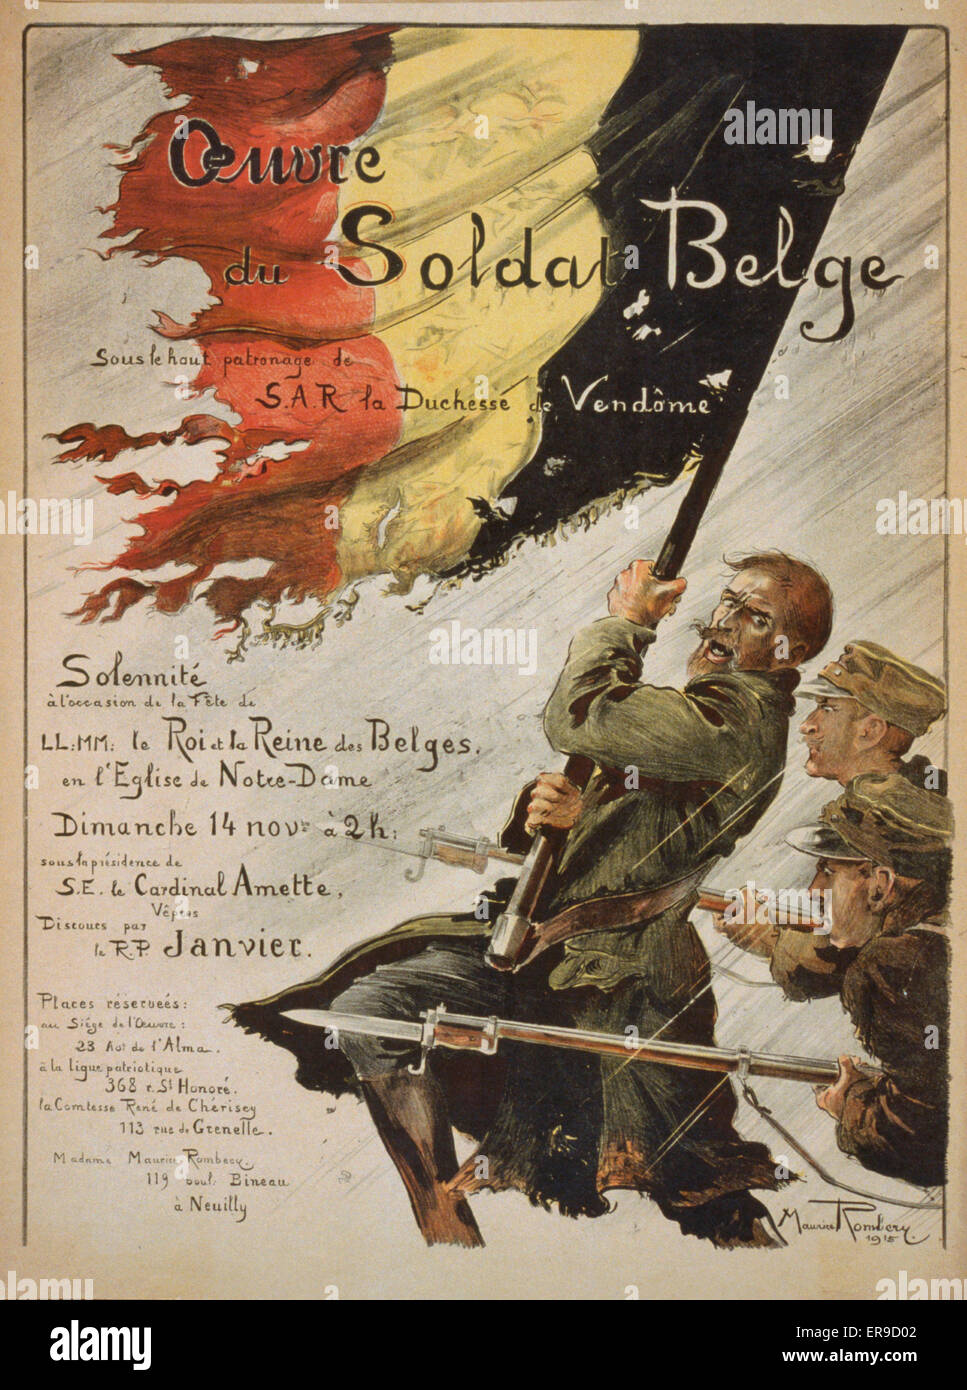 Oeuvre du soldat belge Stock Photo